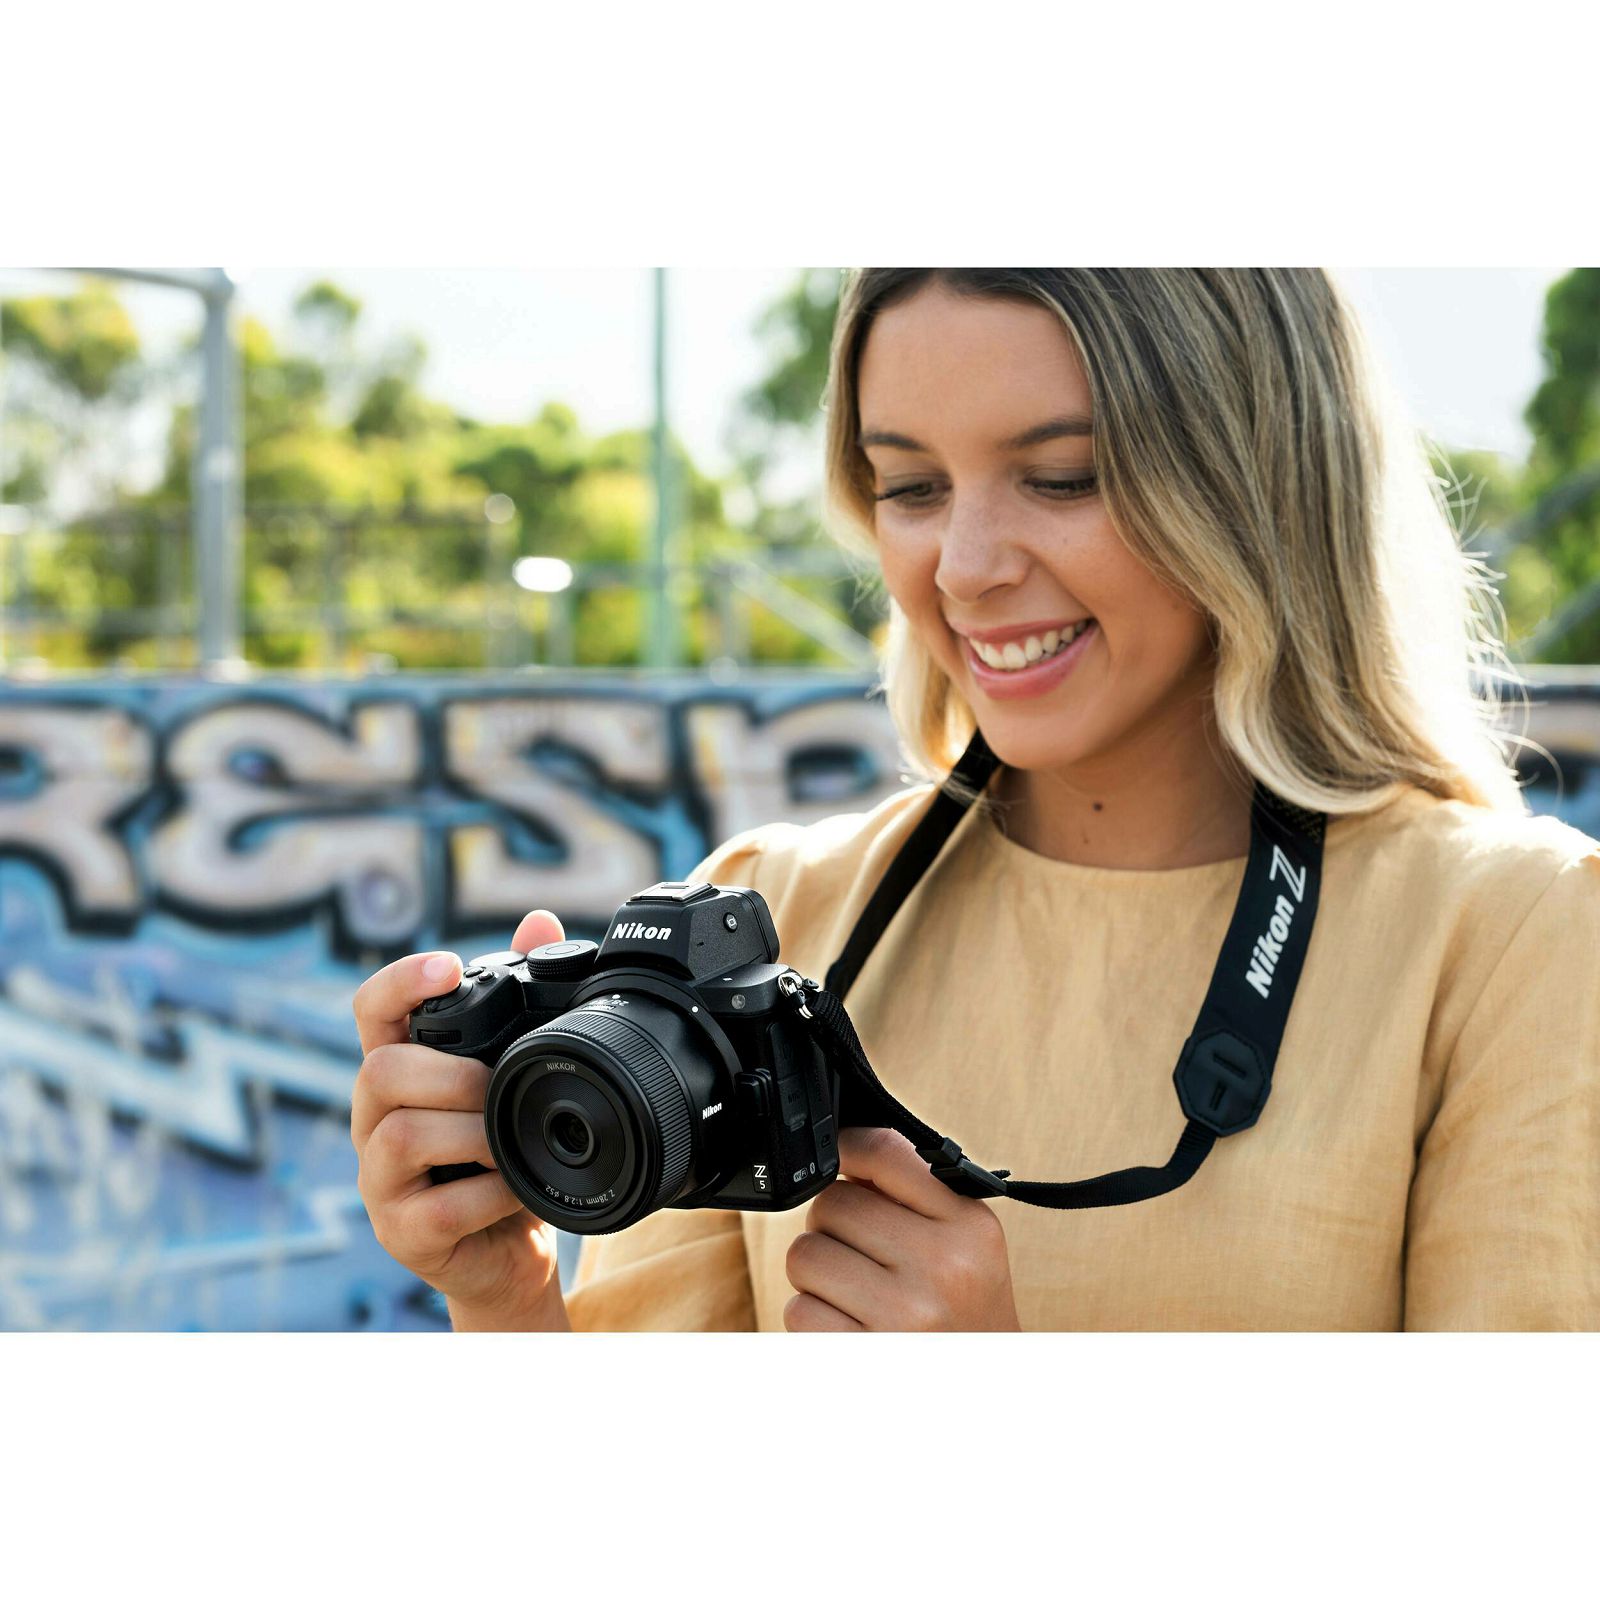 Nikon Z 28mm f/2.8 širokokutni objektiv (JMA105DA)